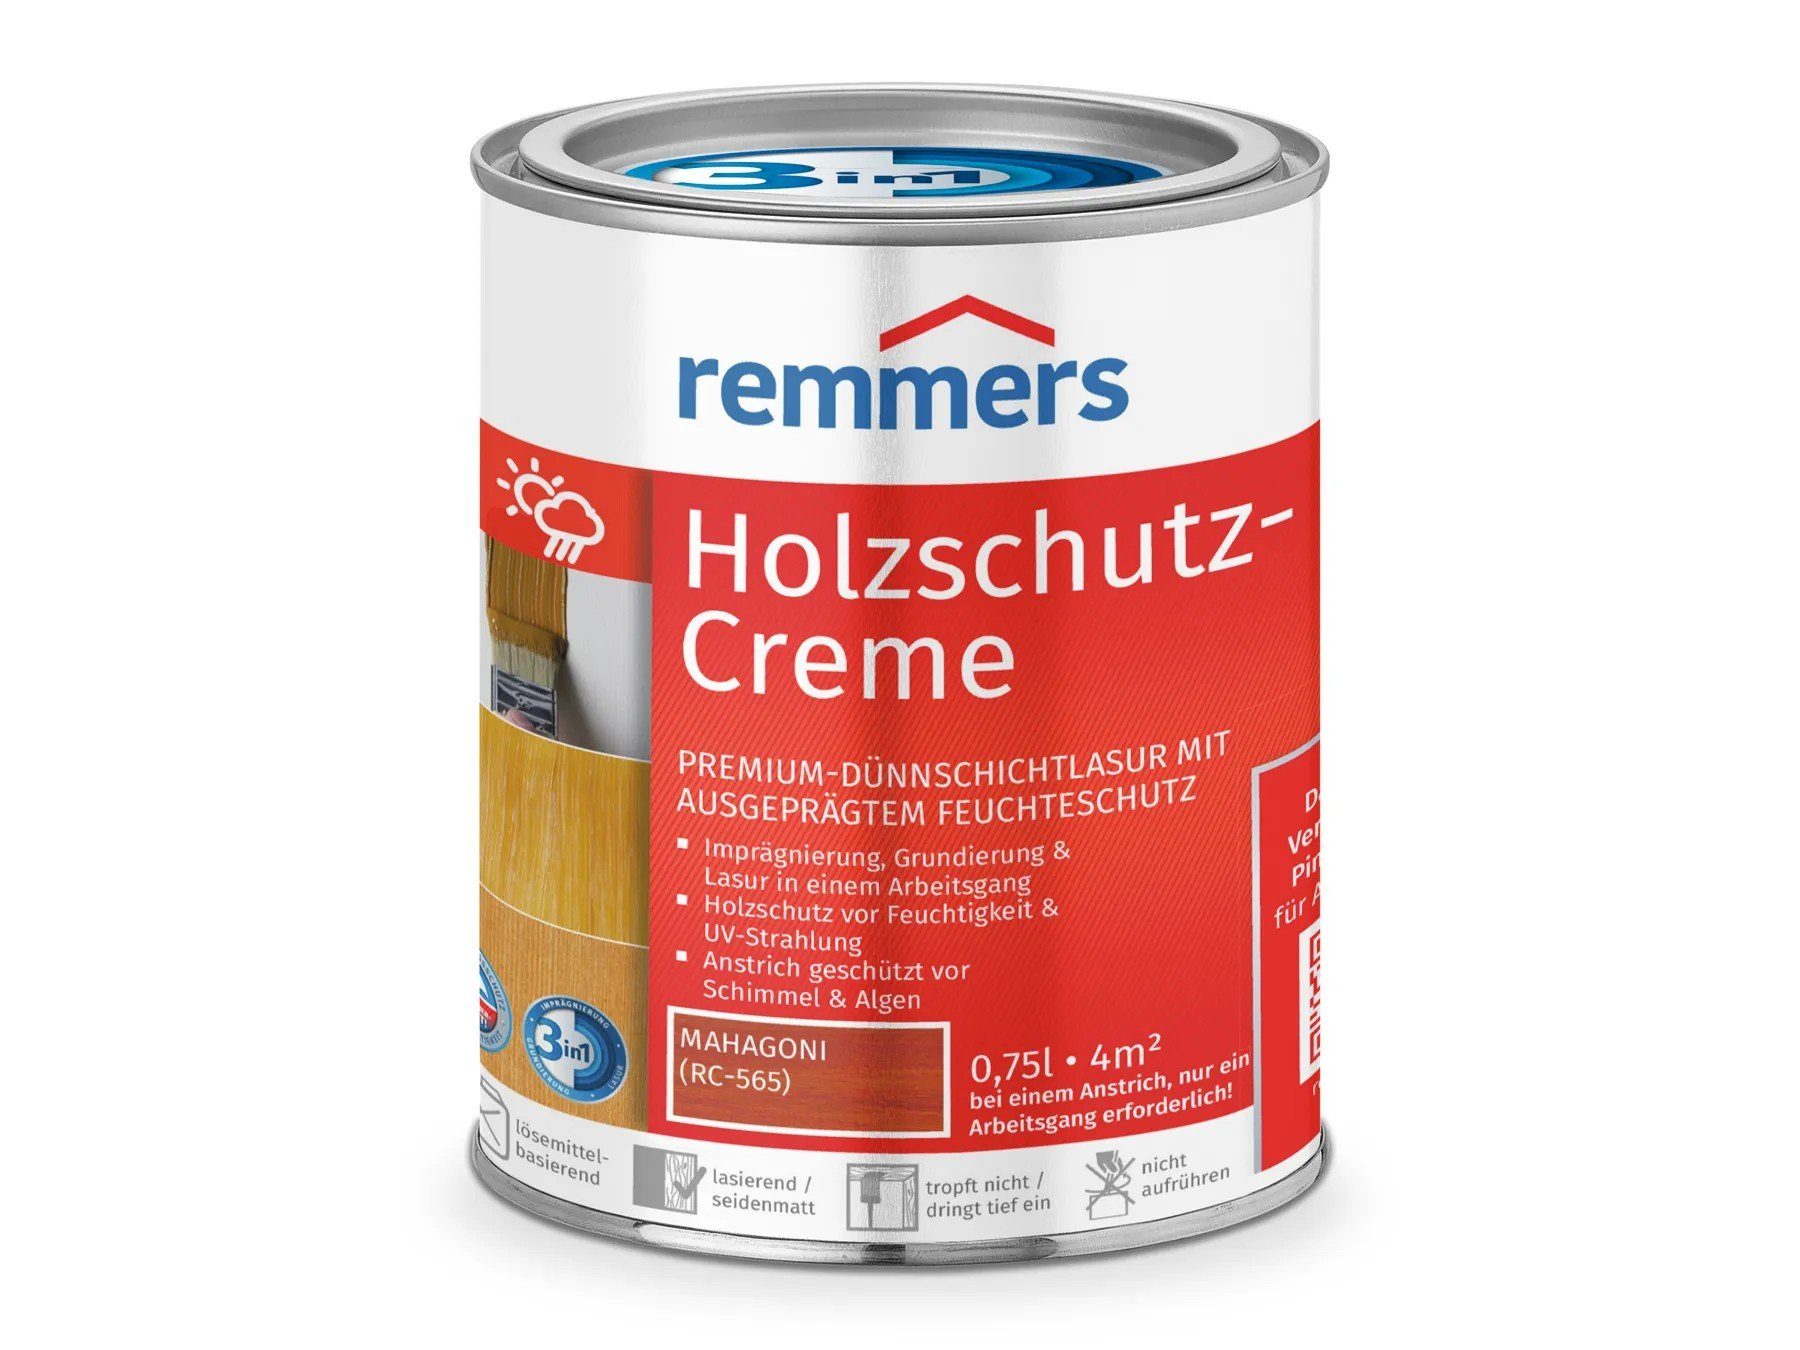 Holzschutz-Creme Remmers 3in1 mahagoni (RC-565) Holzschutzlasur